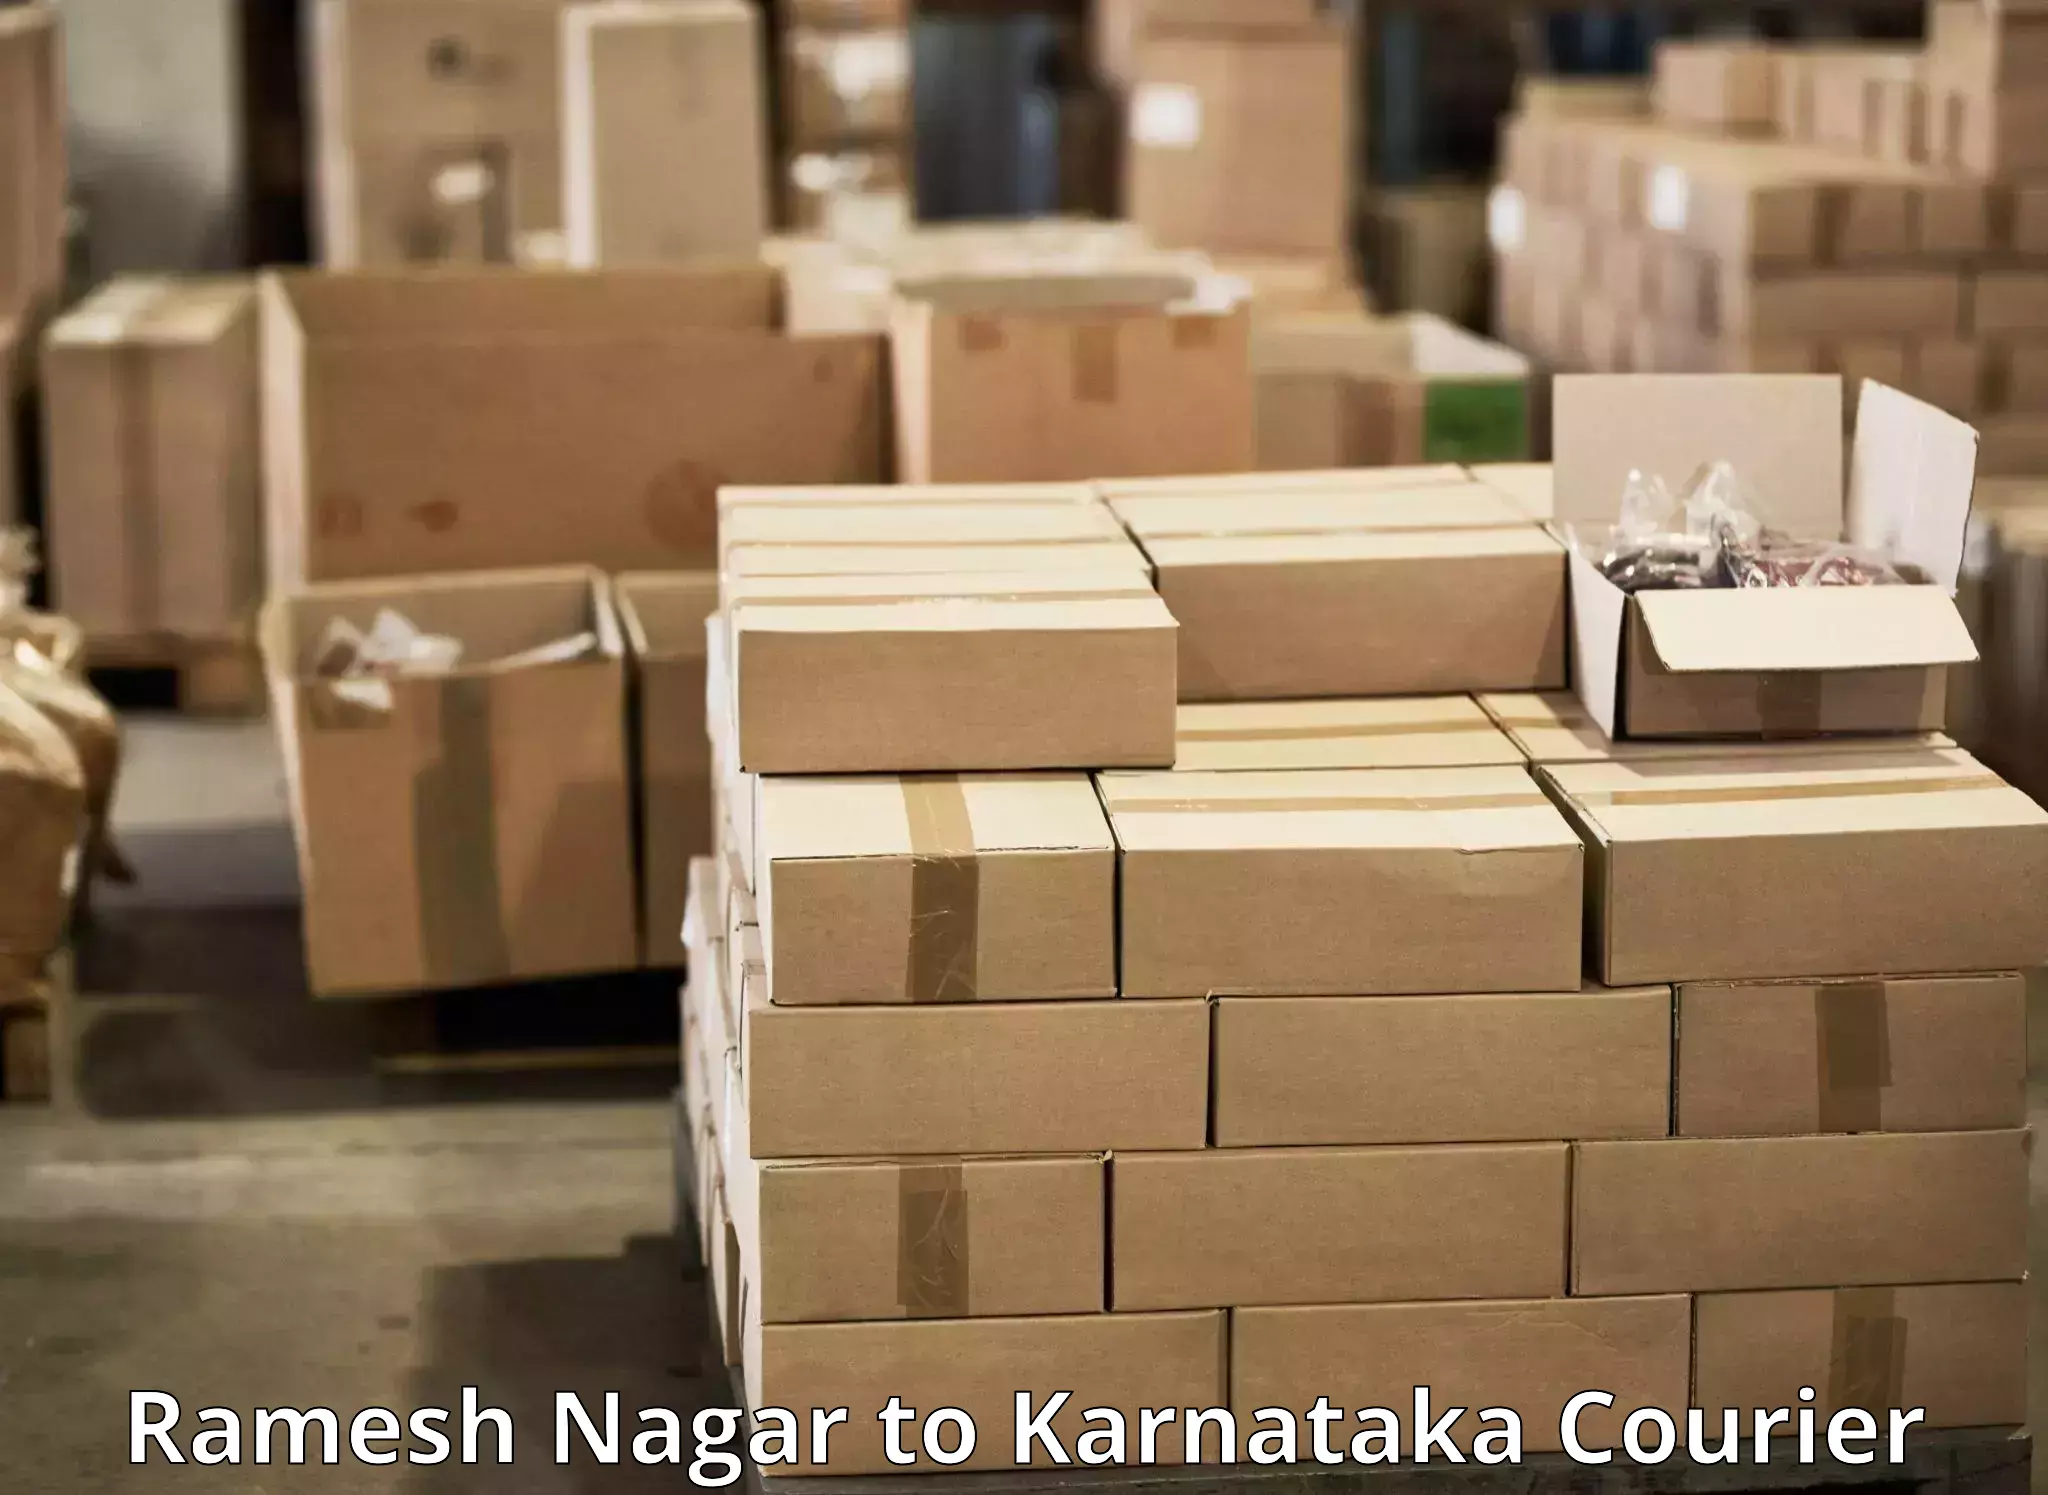 Global shipping networks Ramesh Nagar to Hubli